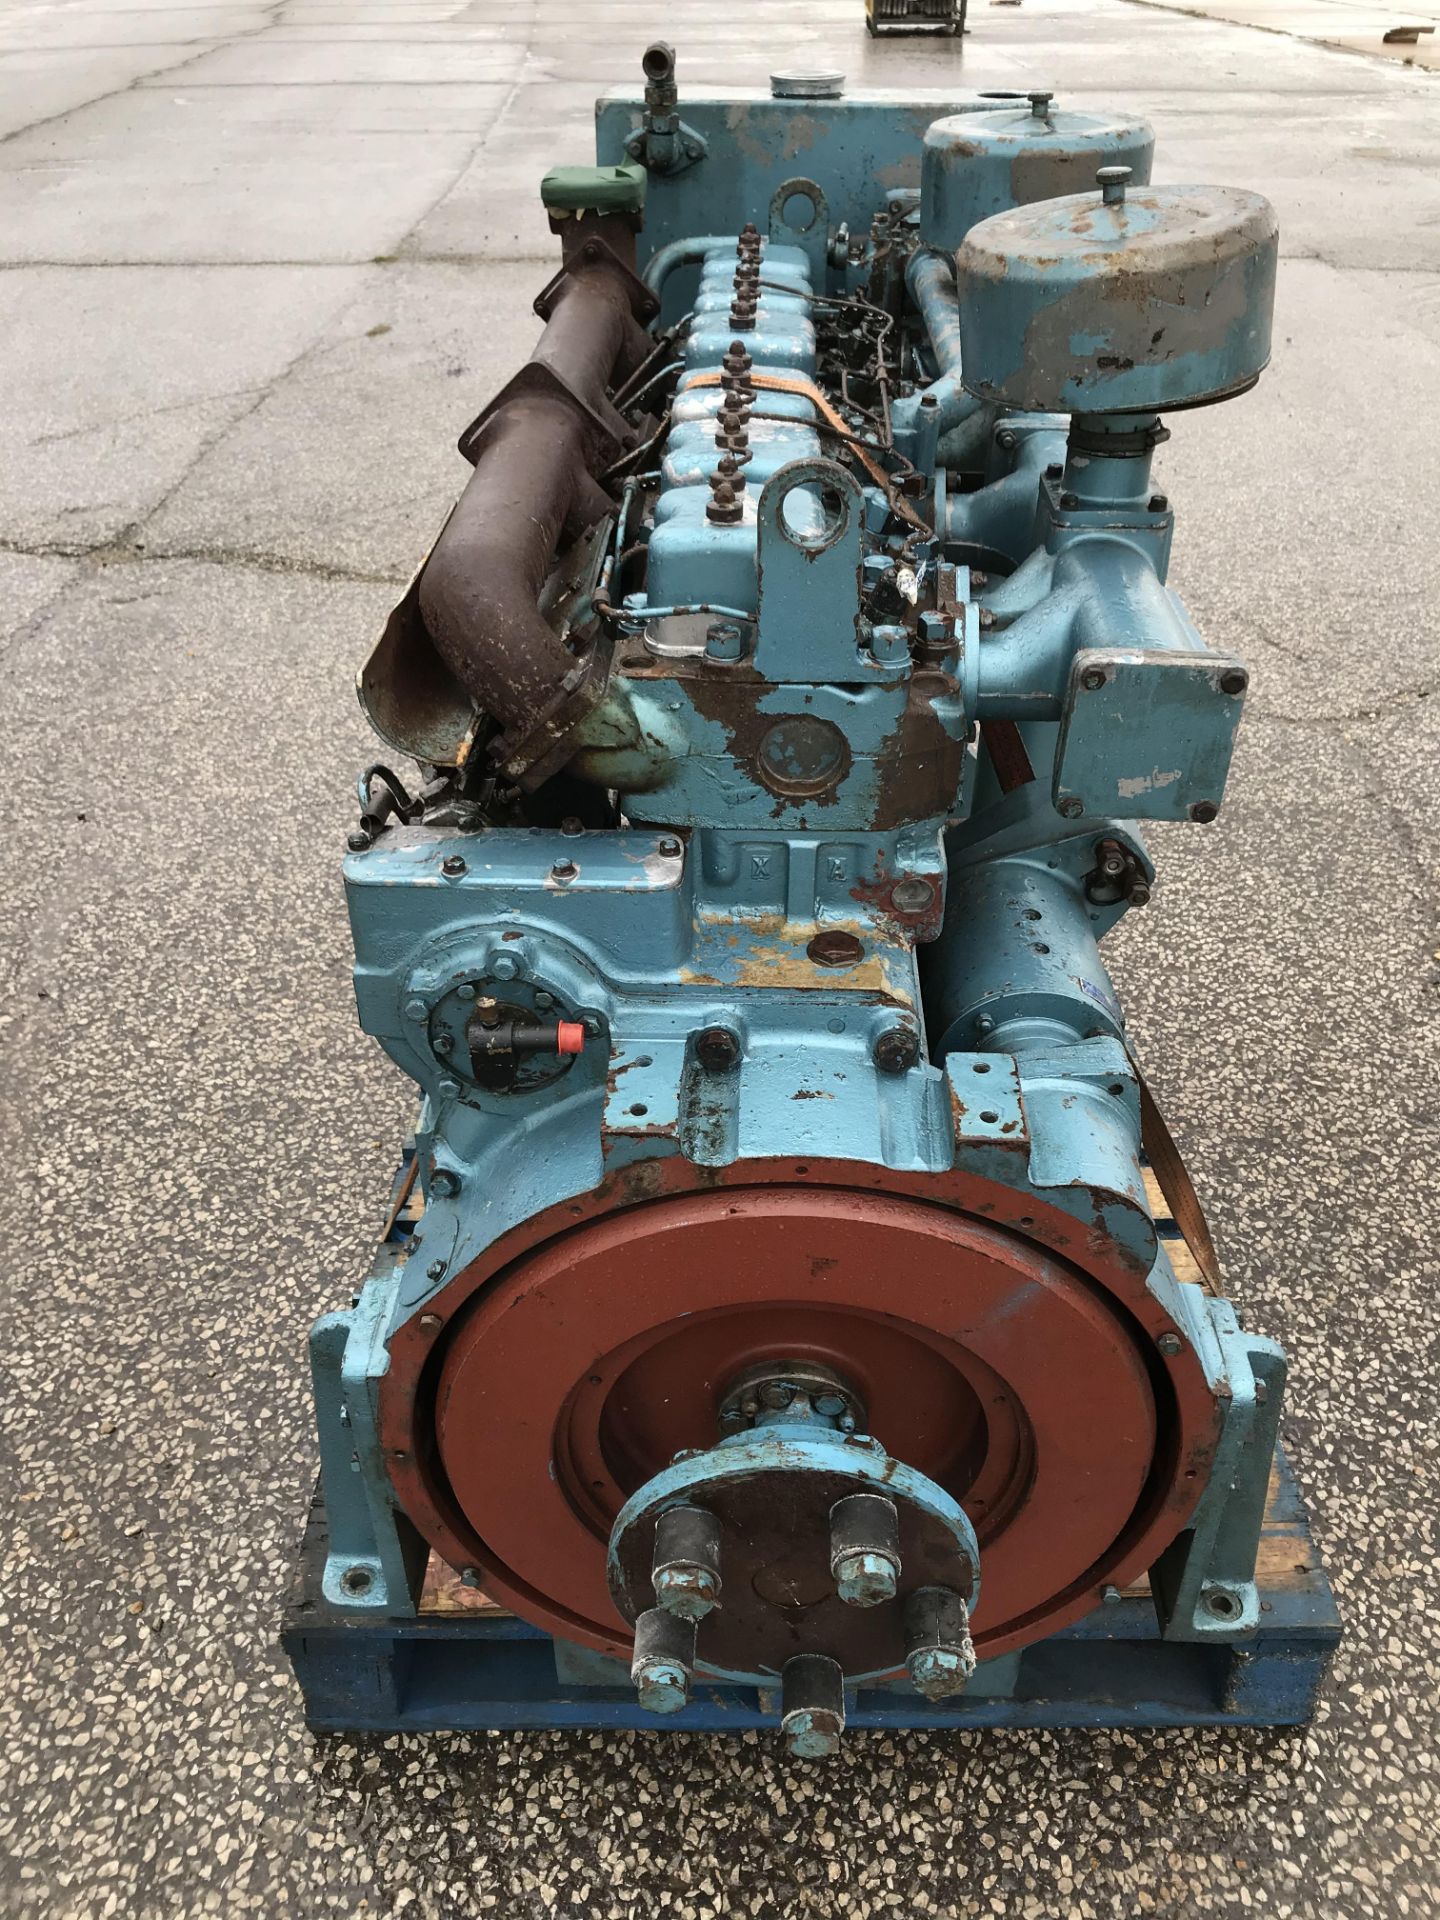 Dorman 6LE Diesel Engine: Ex Standby - Image 4 of 6